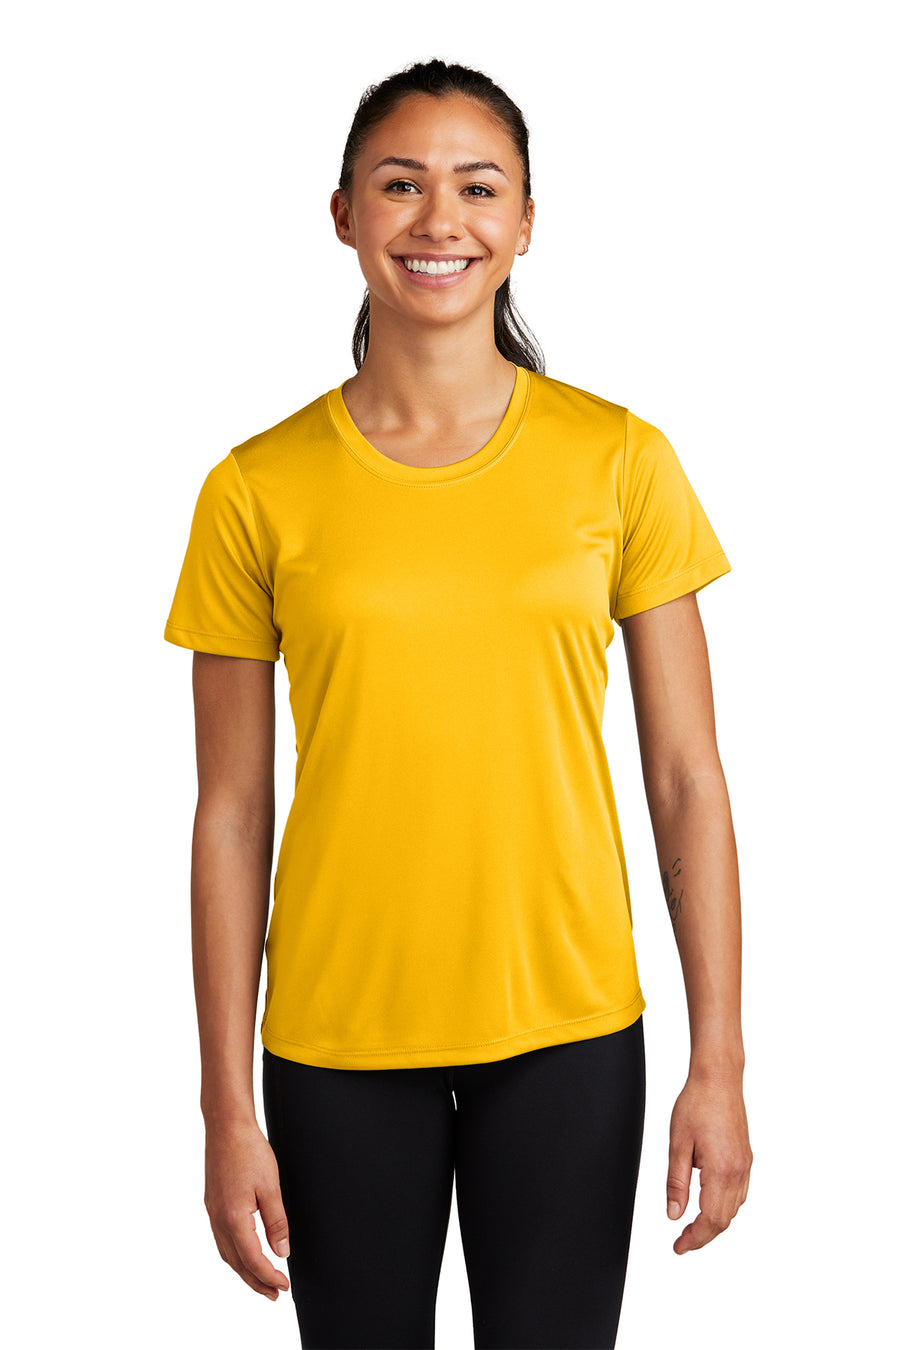 Women's 100% Polyester Moisture-Wicking T-Shirt (Short Sleeve) for Clay Soccer